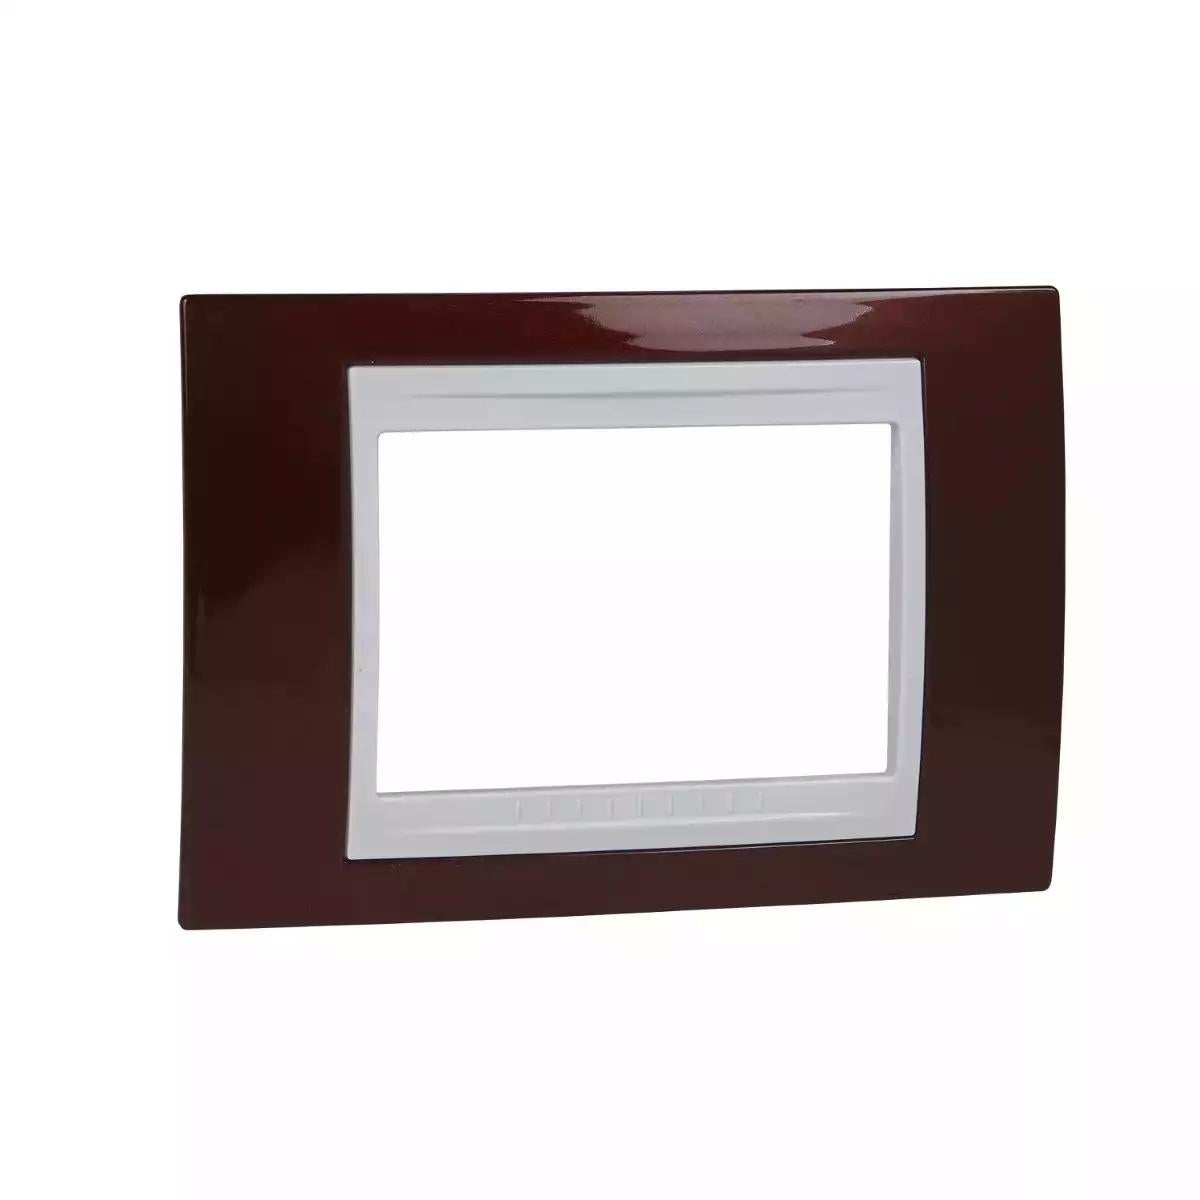 Unica Plus - cover frame - 3 modules - terracotta/white